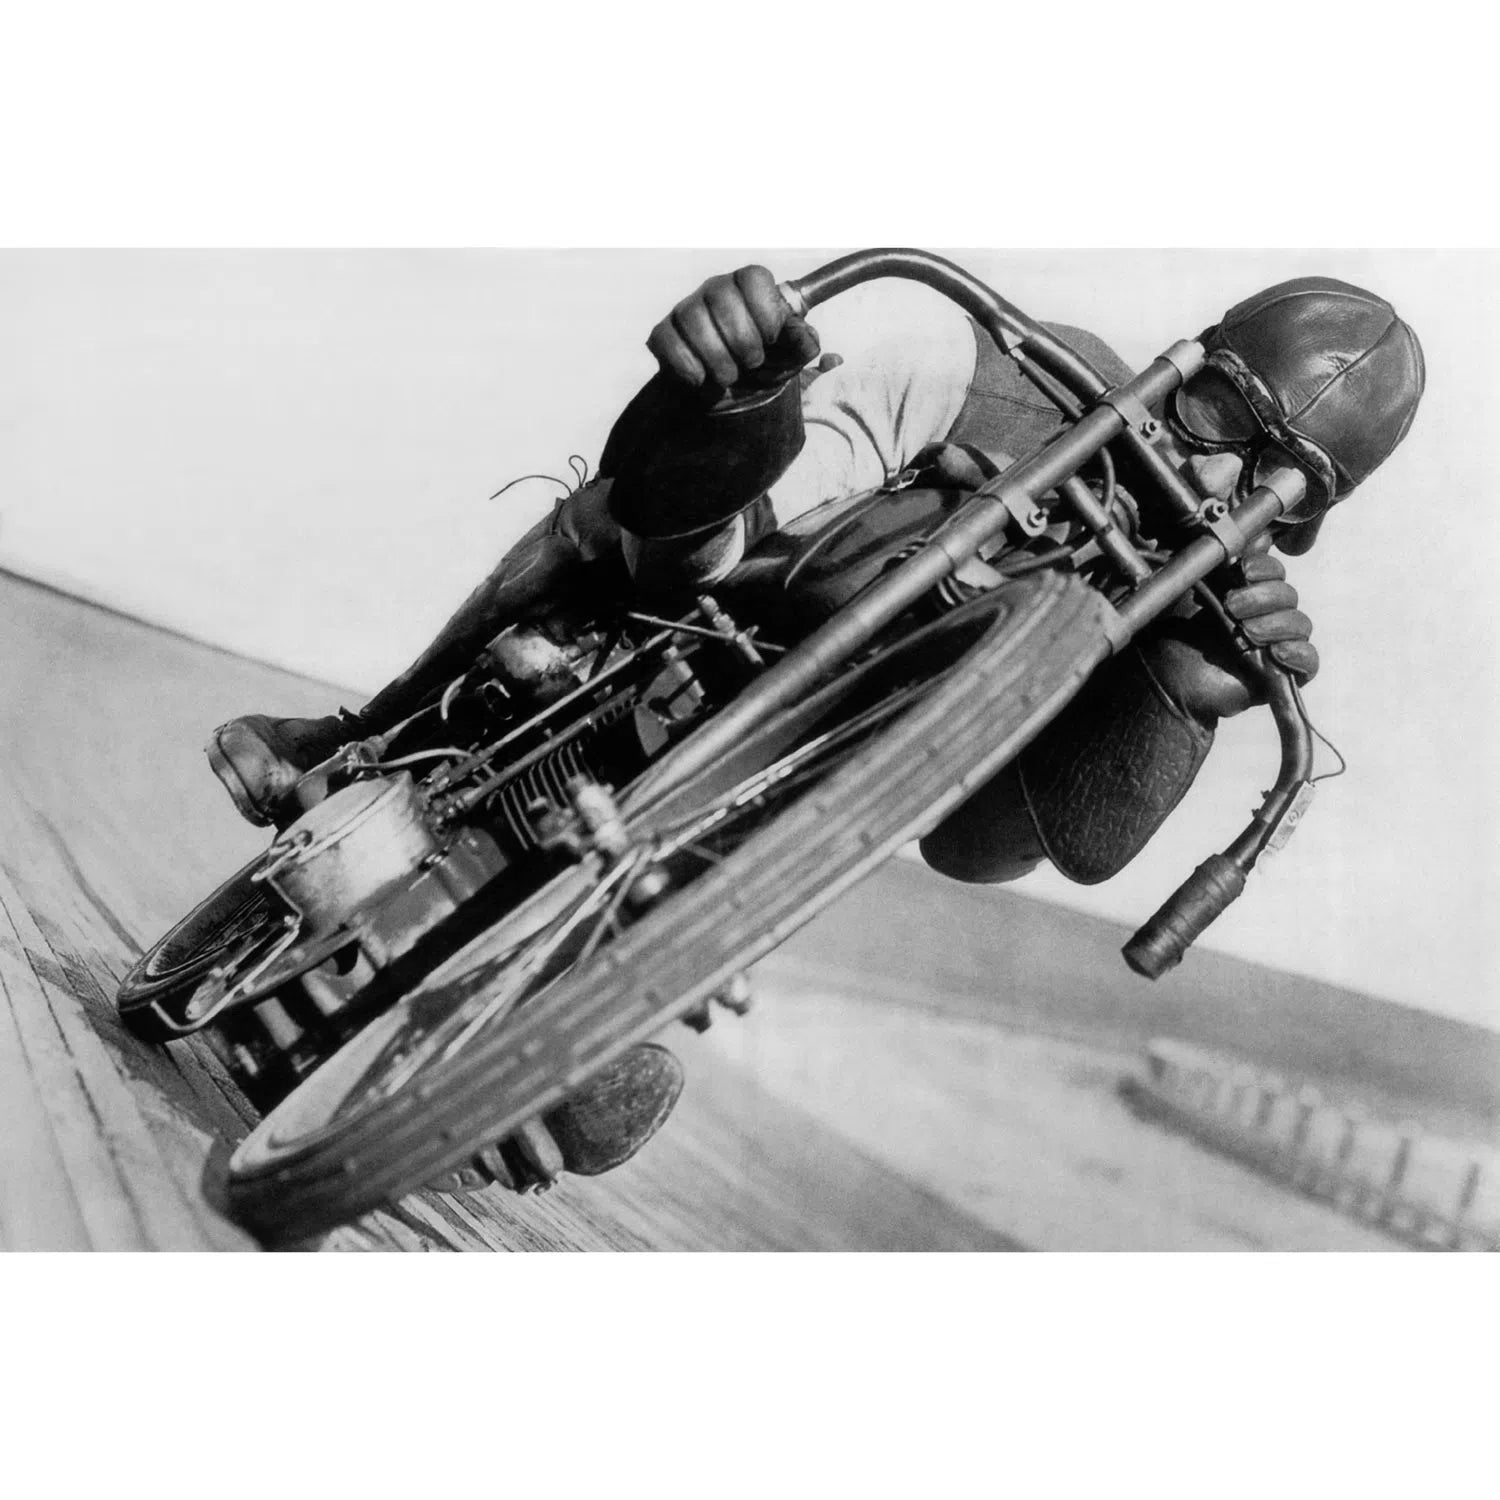 Harley Vintage sur un circuit de course.-Imagesdartistes